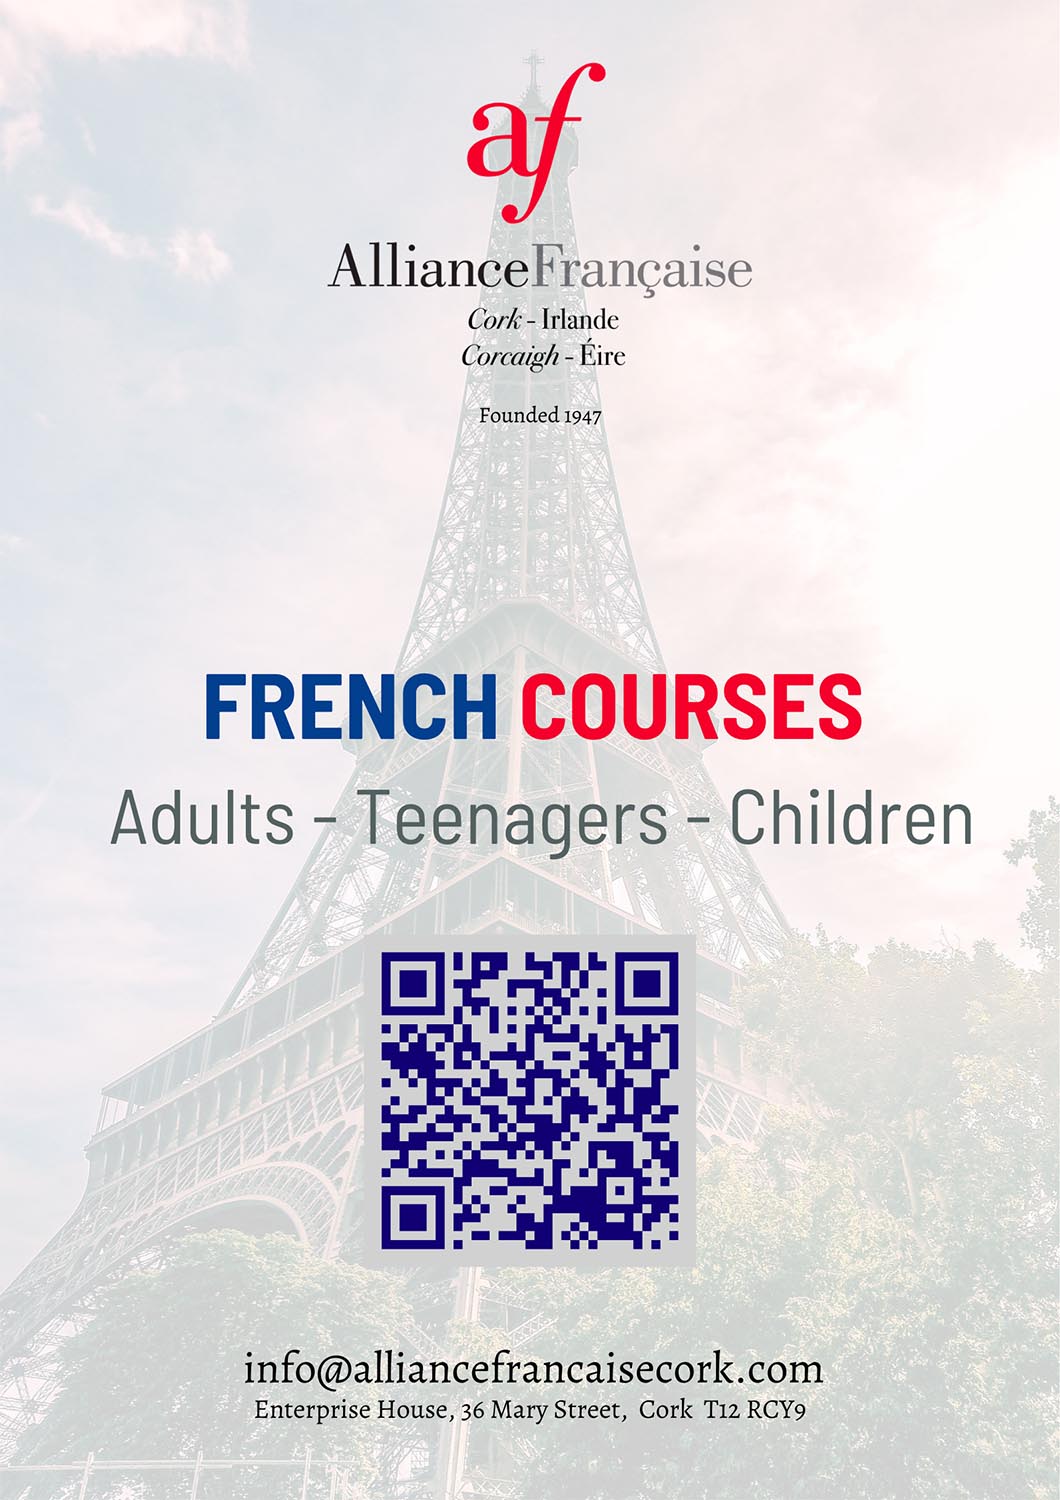 Alliance Française French Courses Image